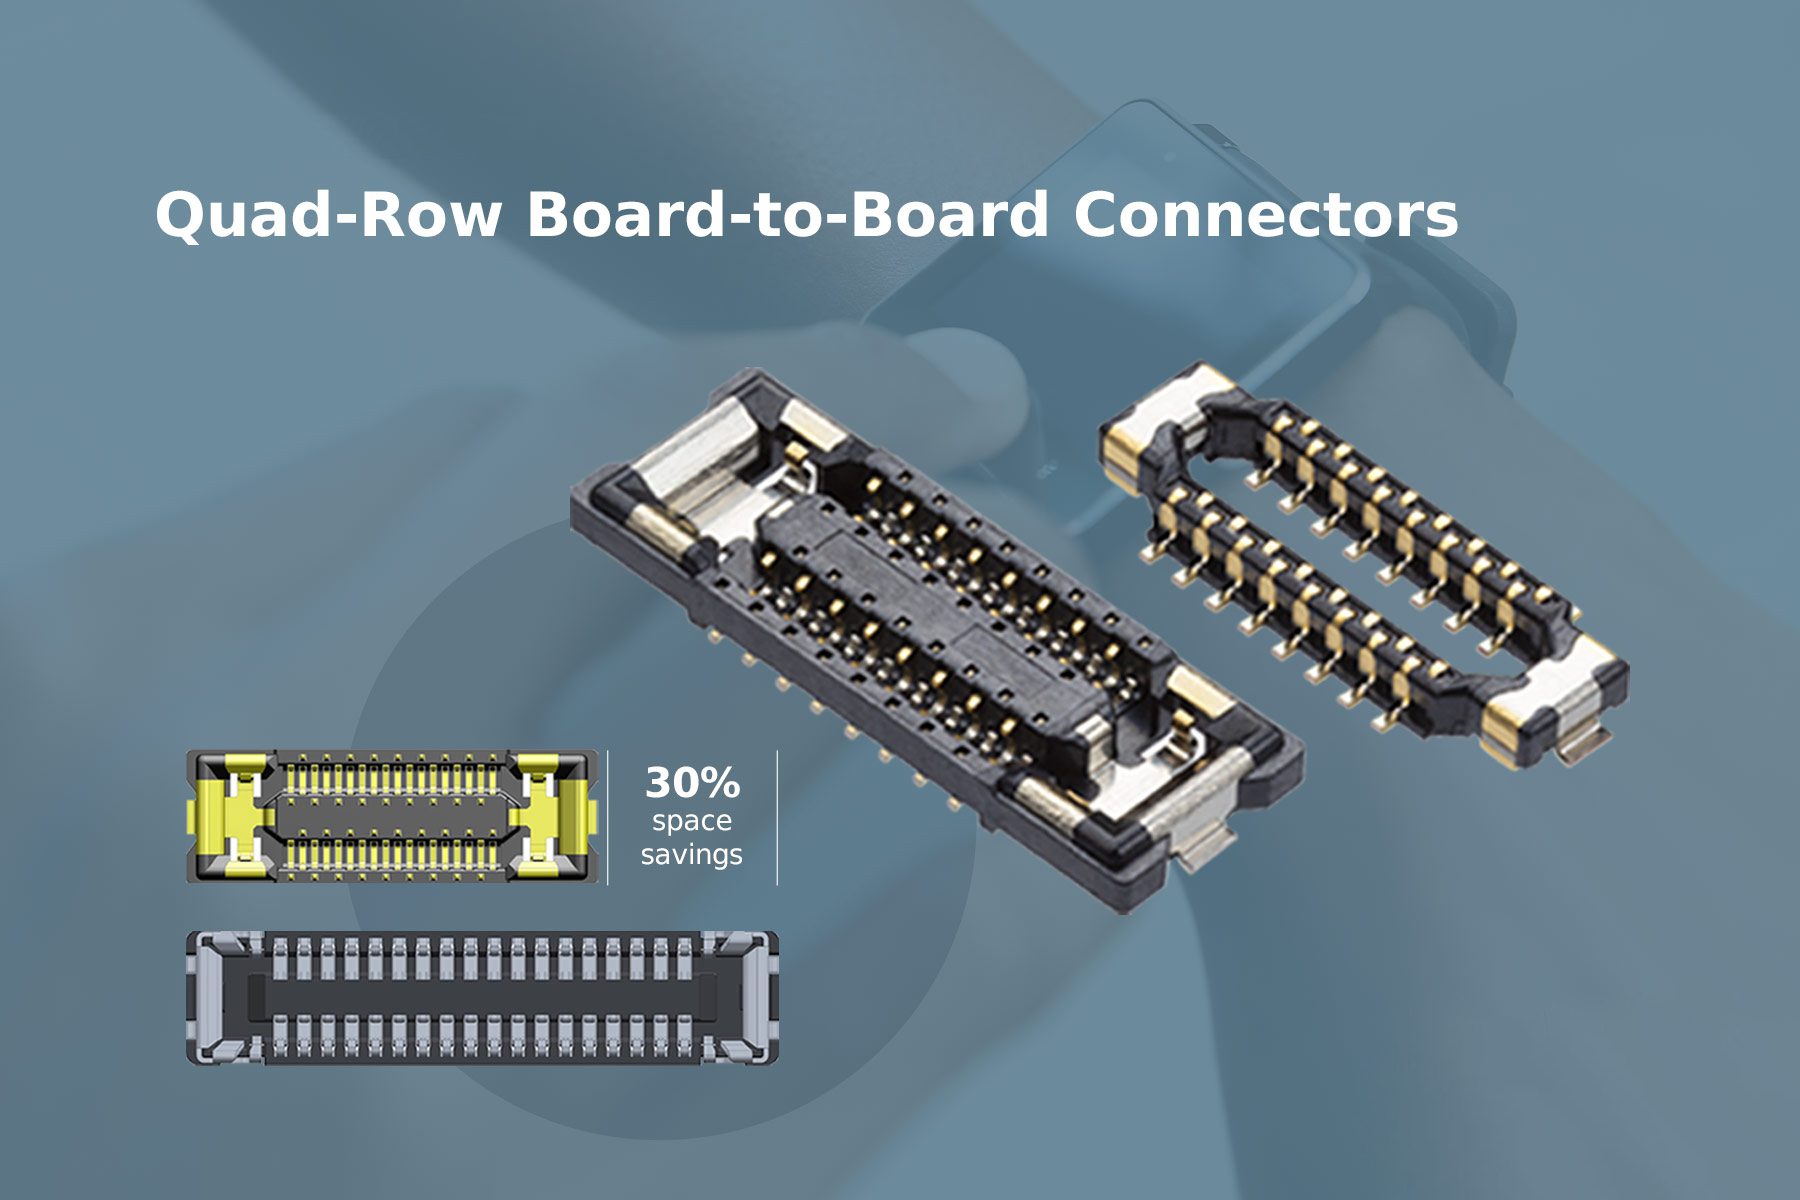 Molex quad-row board-to-board connectors